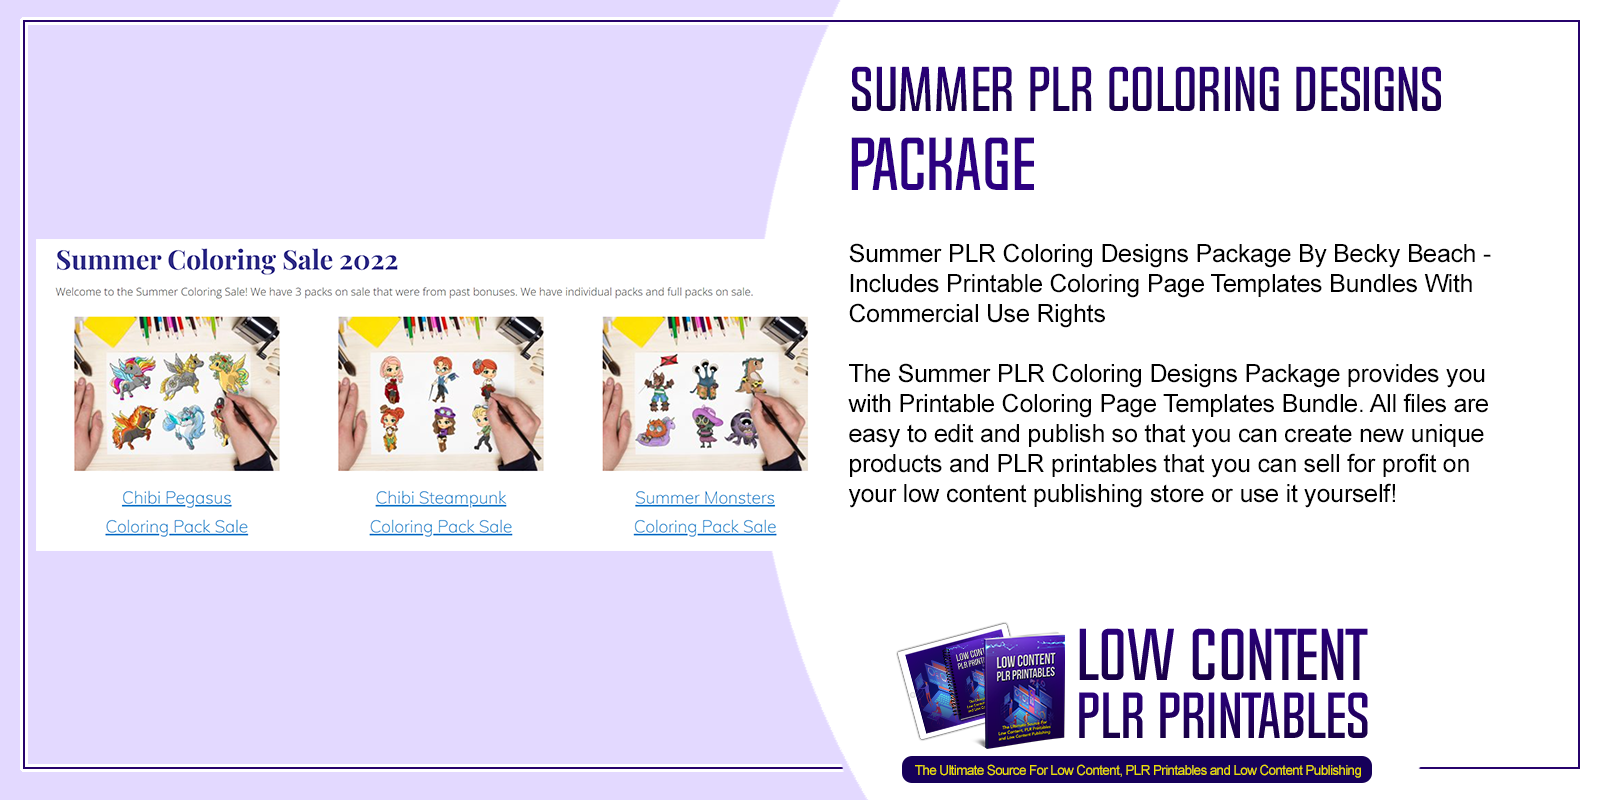 Summer PLR Coloring Designs Package